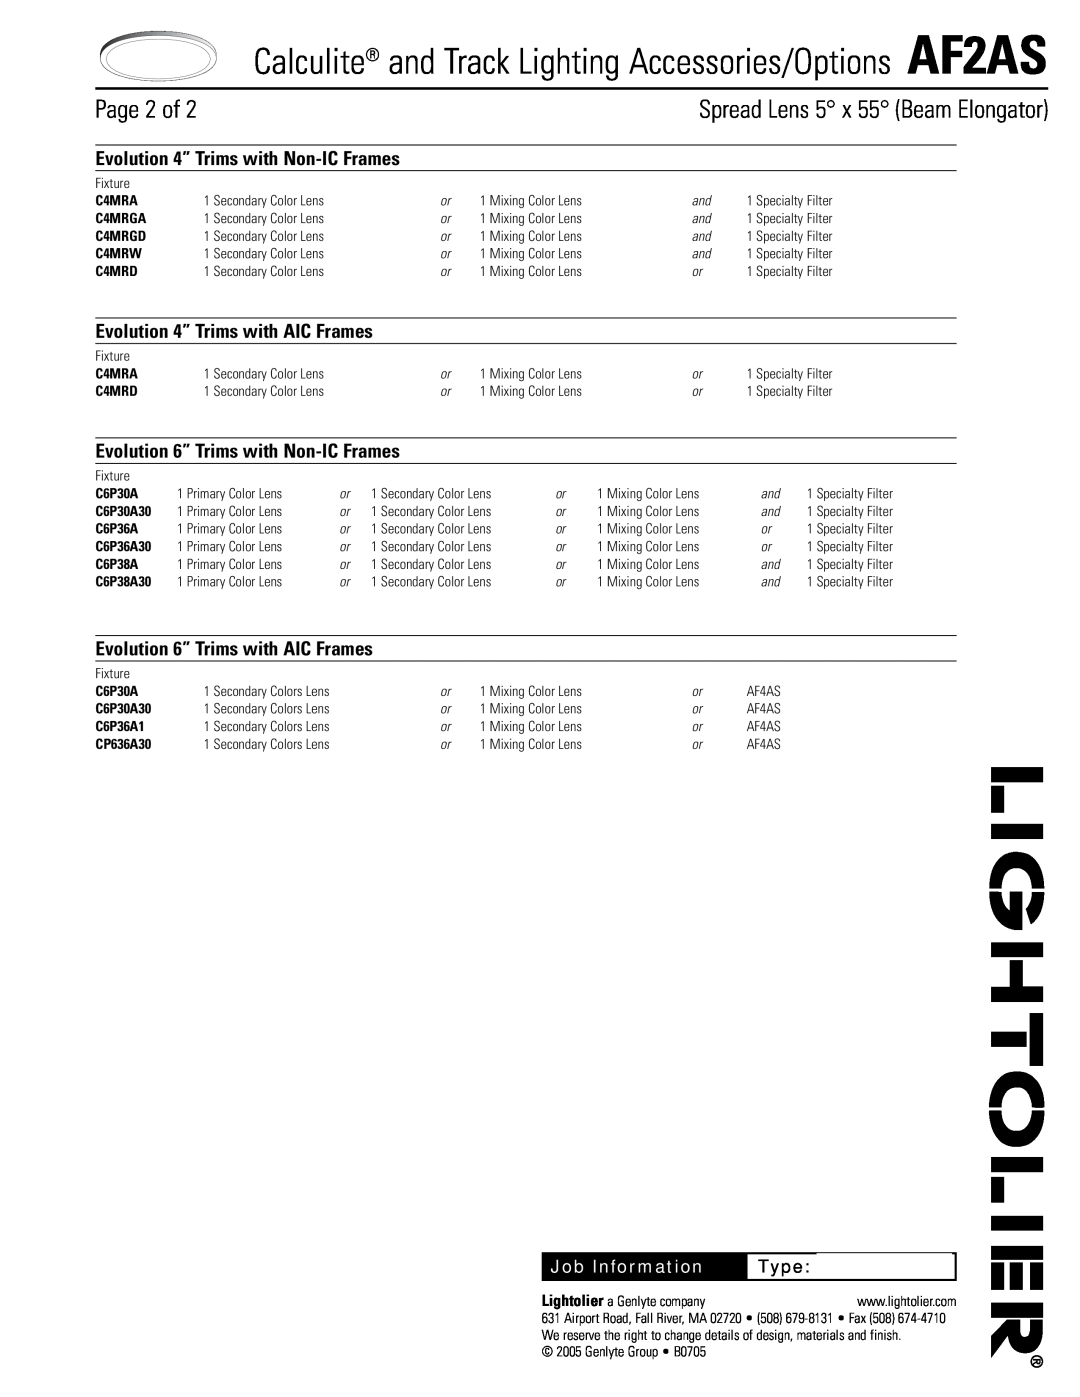 Lightolier AF2AS manual Evolution 4” Trims with AIC Frames, Evolution 6” Trims with Non-ICFrames, Type, Page 2 of 